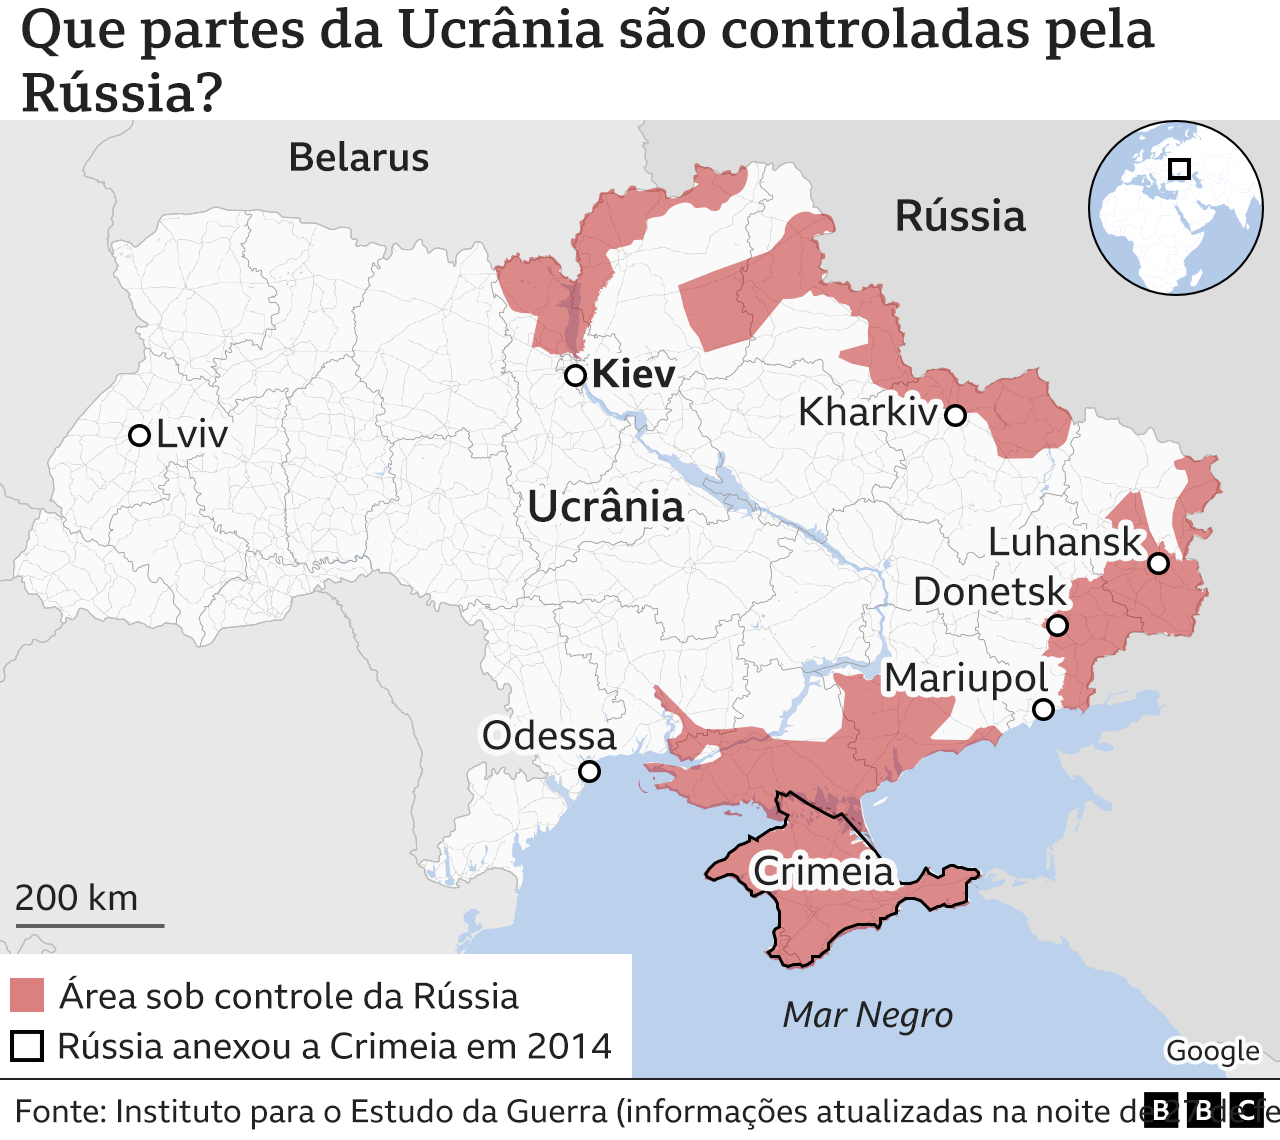  123450574 Ukraine Russian Control Areas Map Portuguese 02 27 2100 Nc 